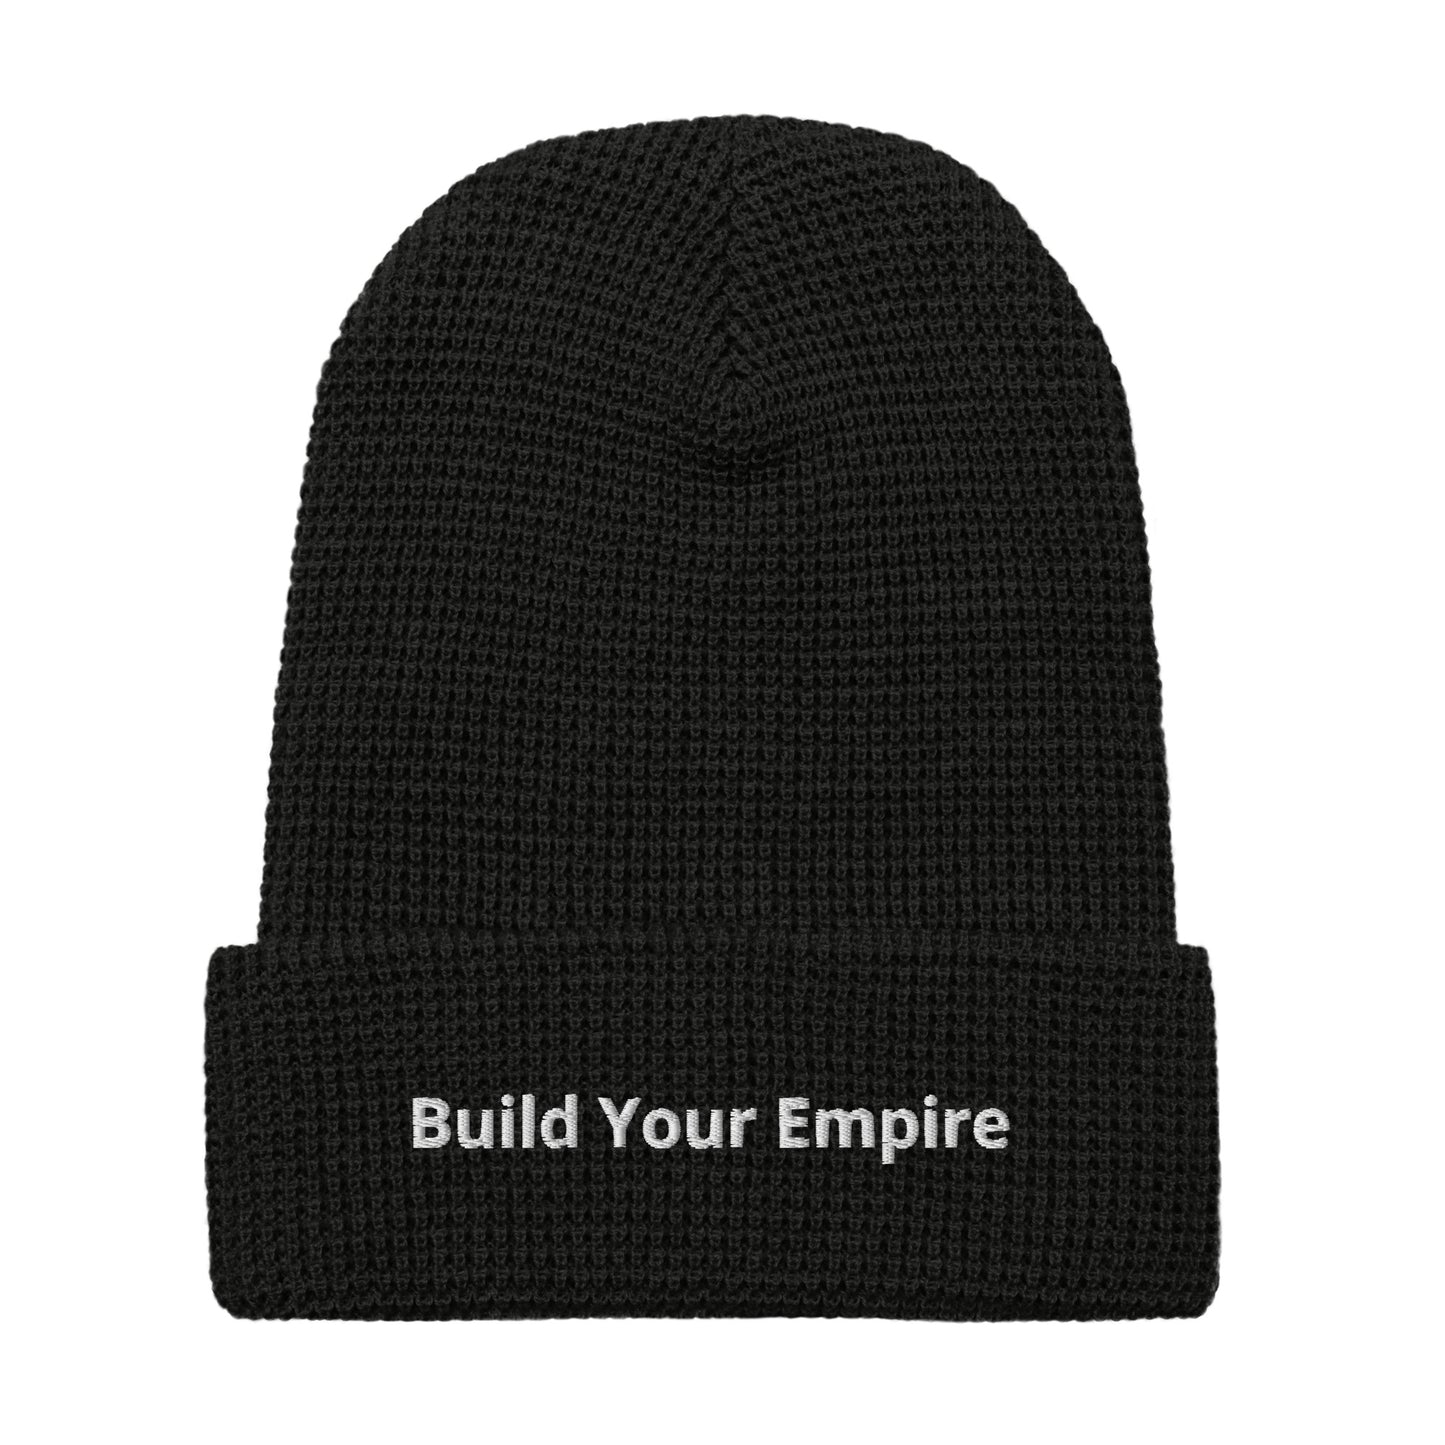 Build Your Empire Beanie - Black/White